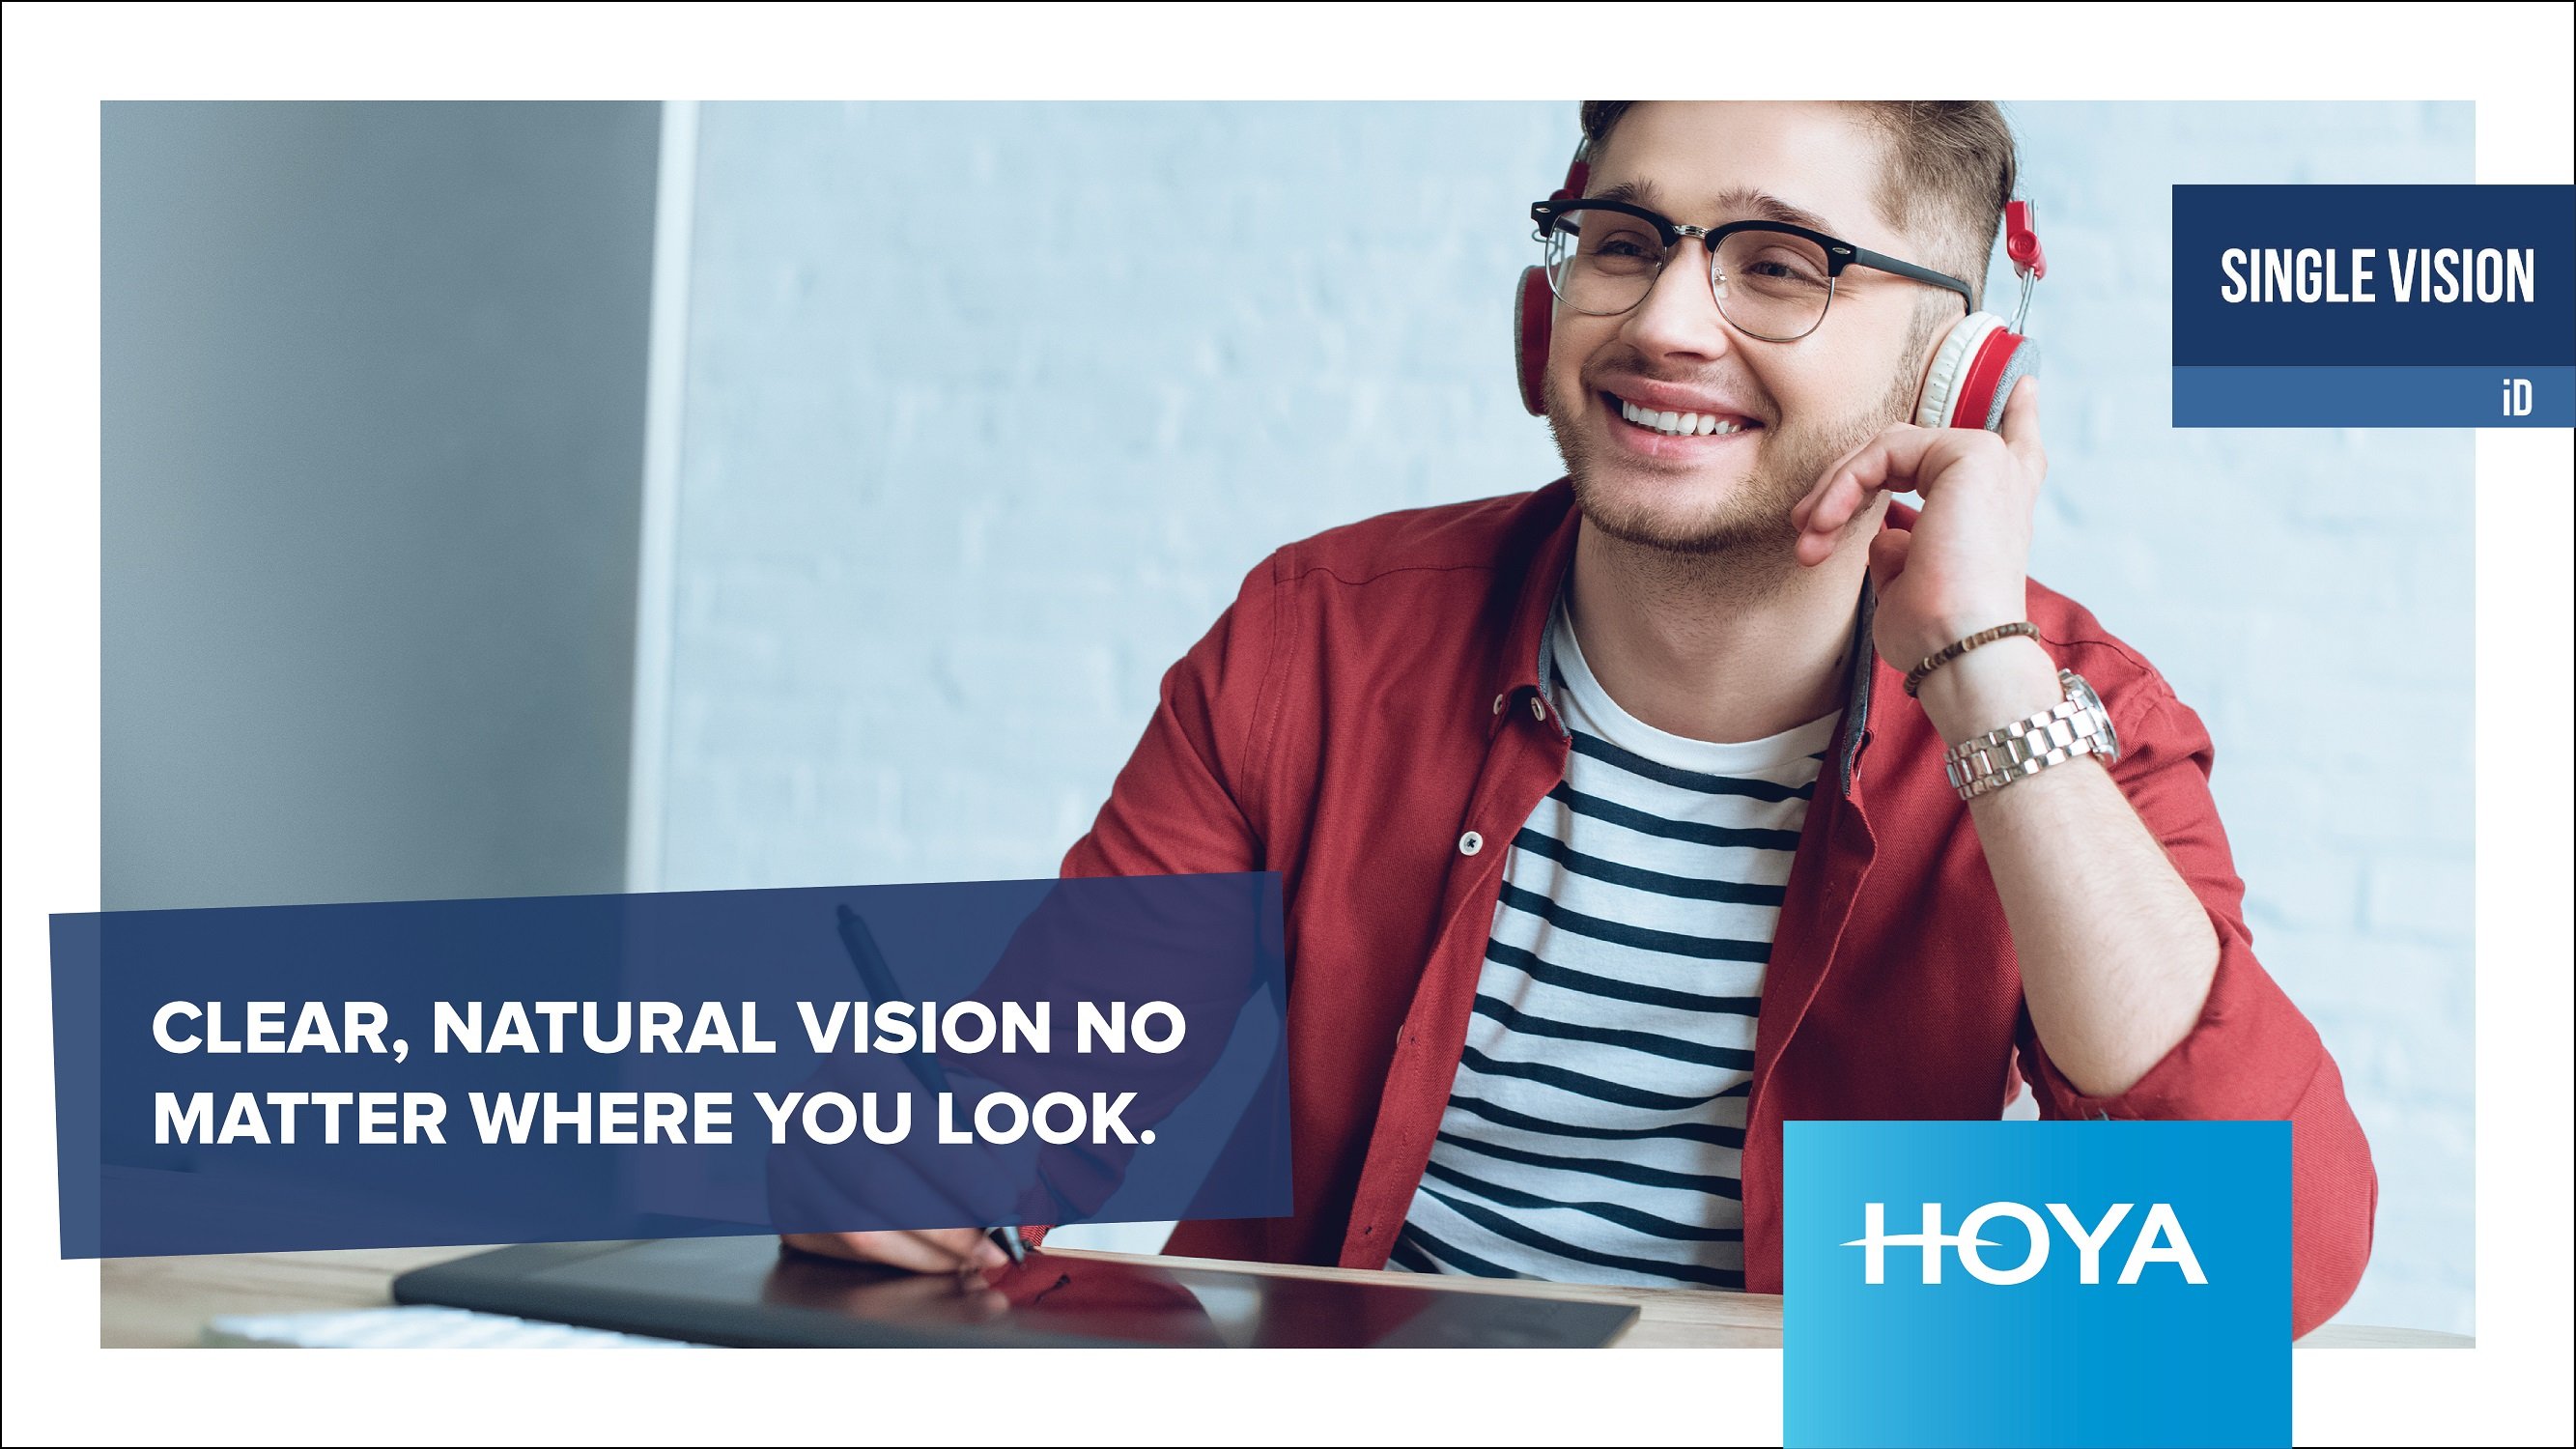 Hoya id single vision lens